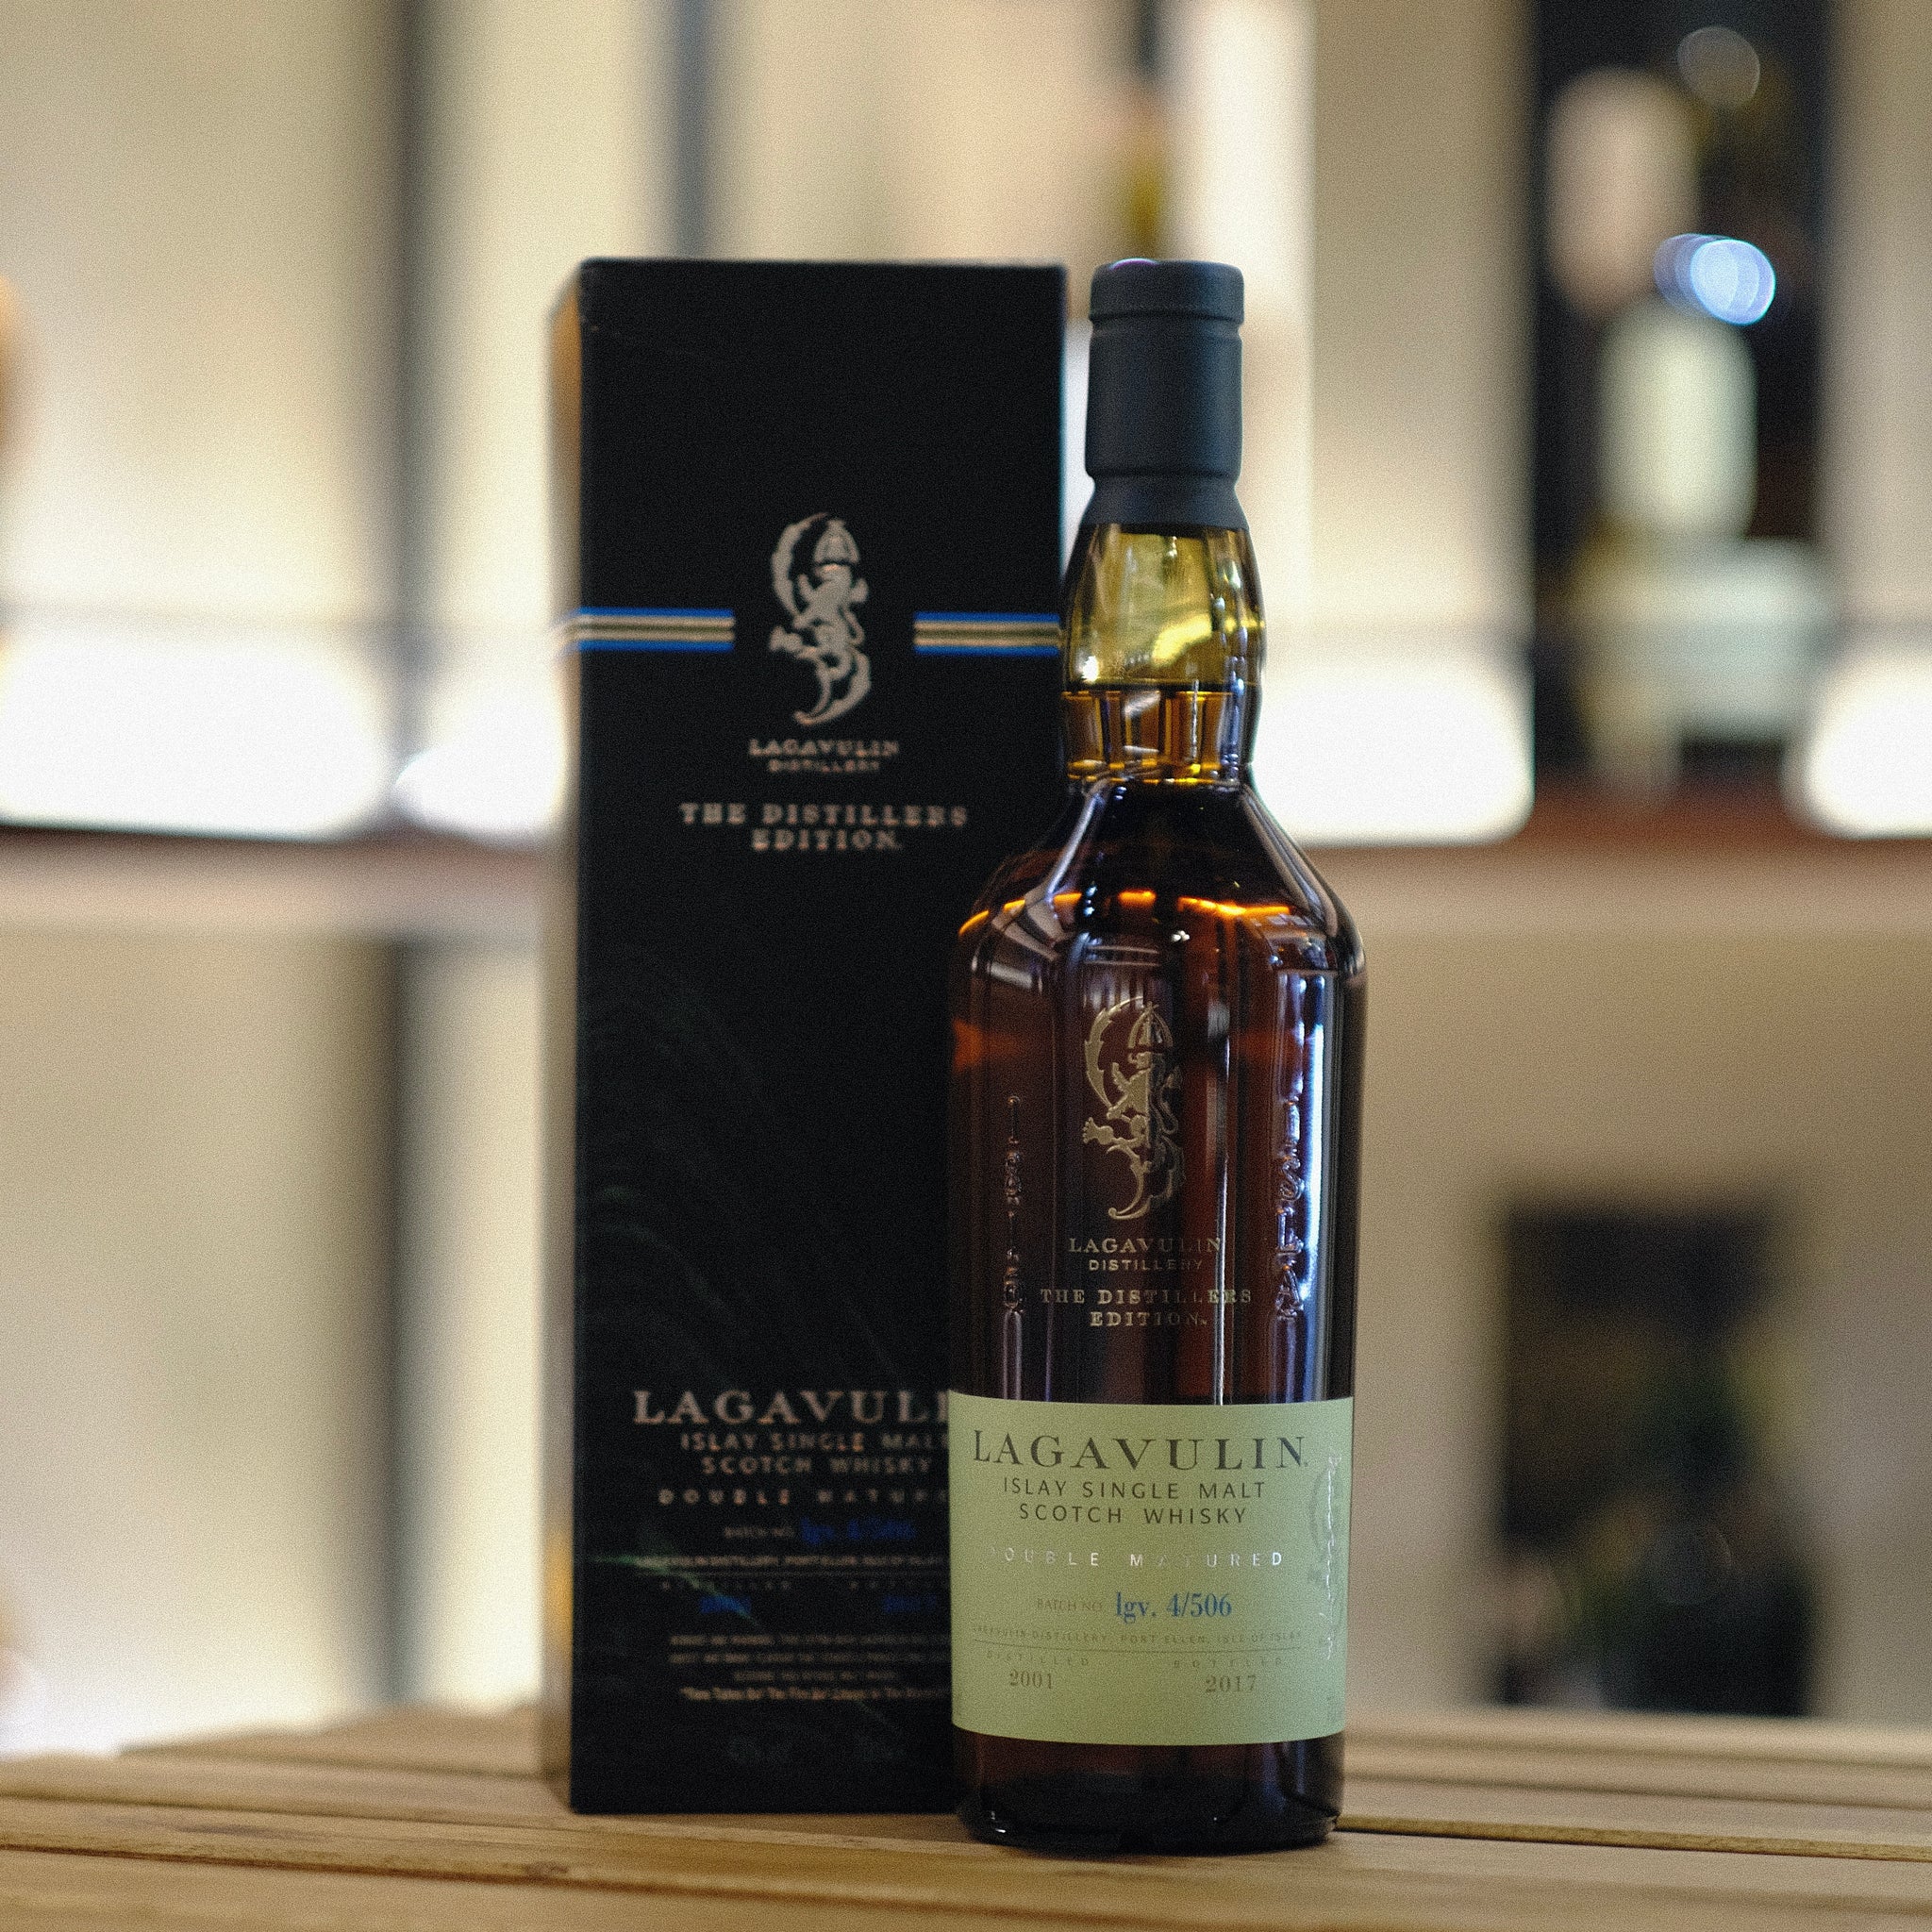 Lagavulin Distiller's Edition 2001-2017 Single Malt Scotch Whisky